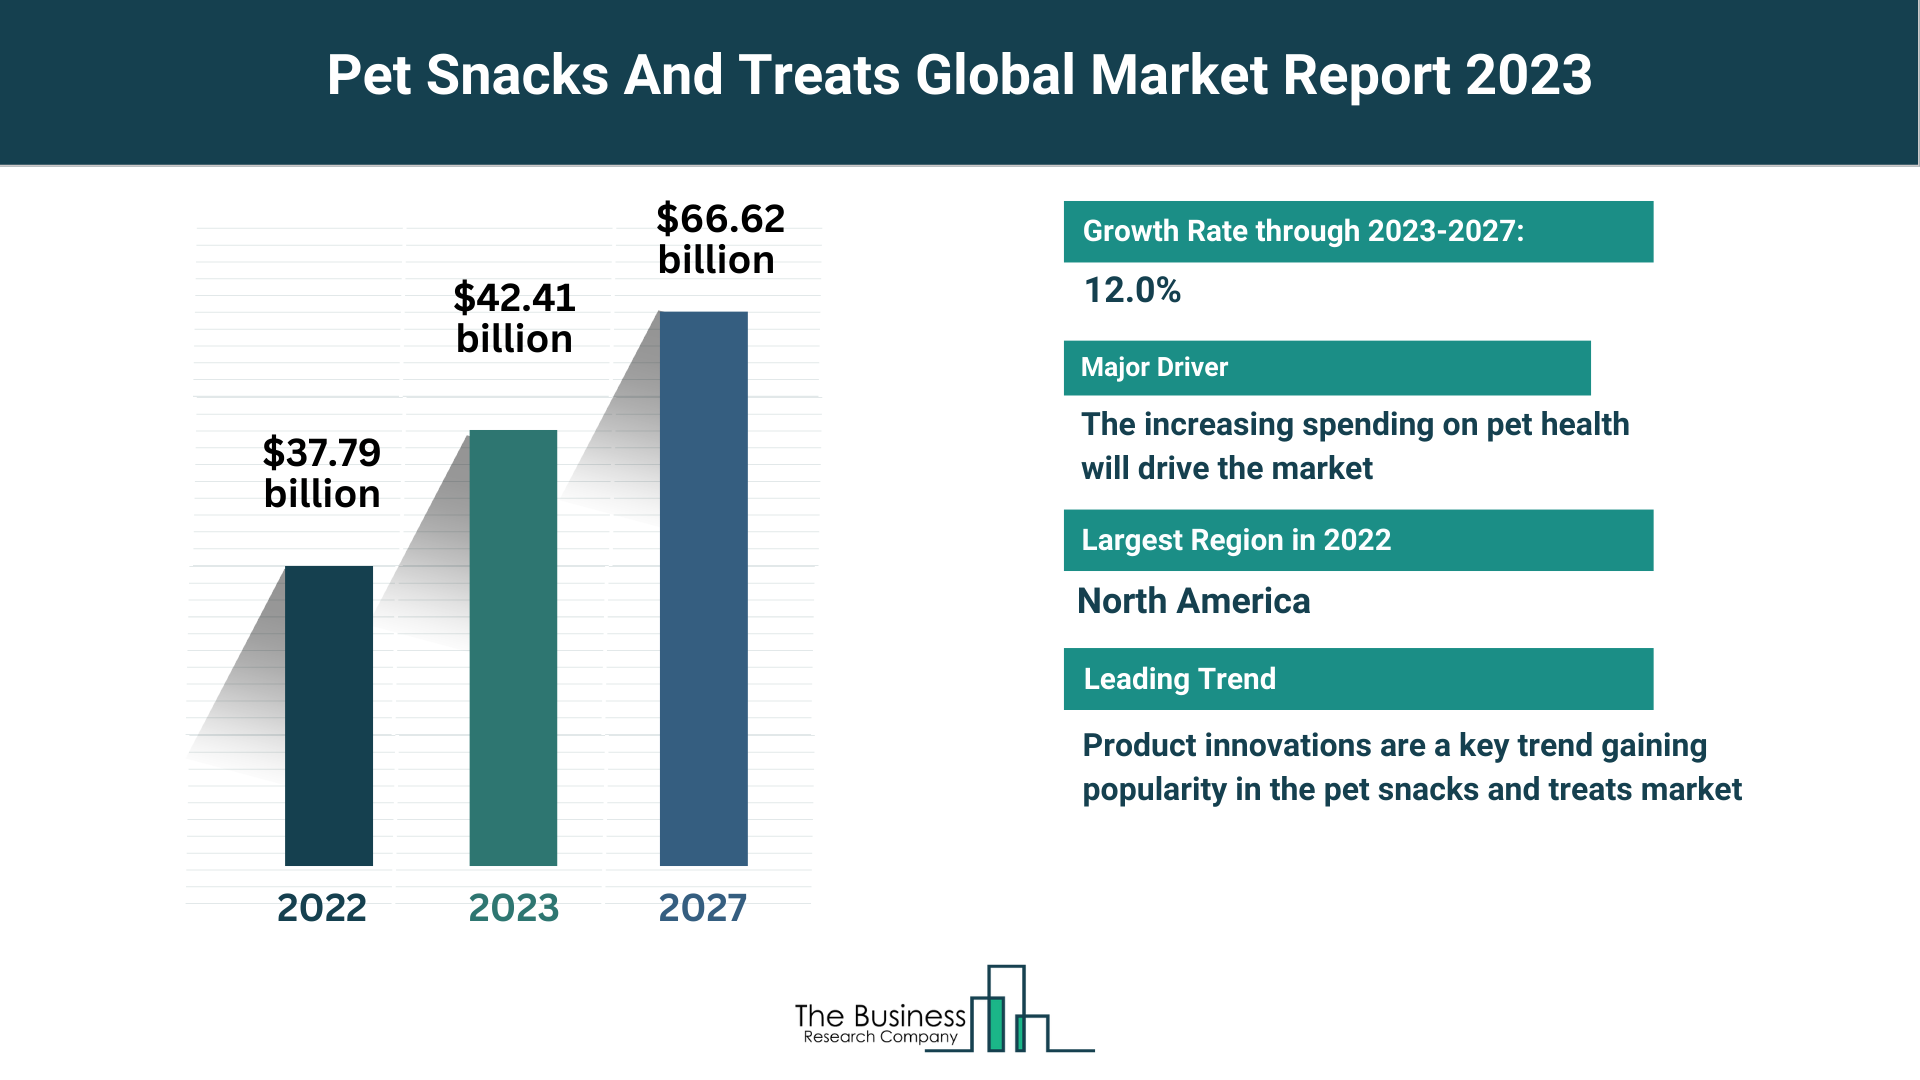 Global Pet Snacks And Treats Market